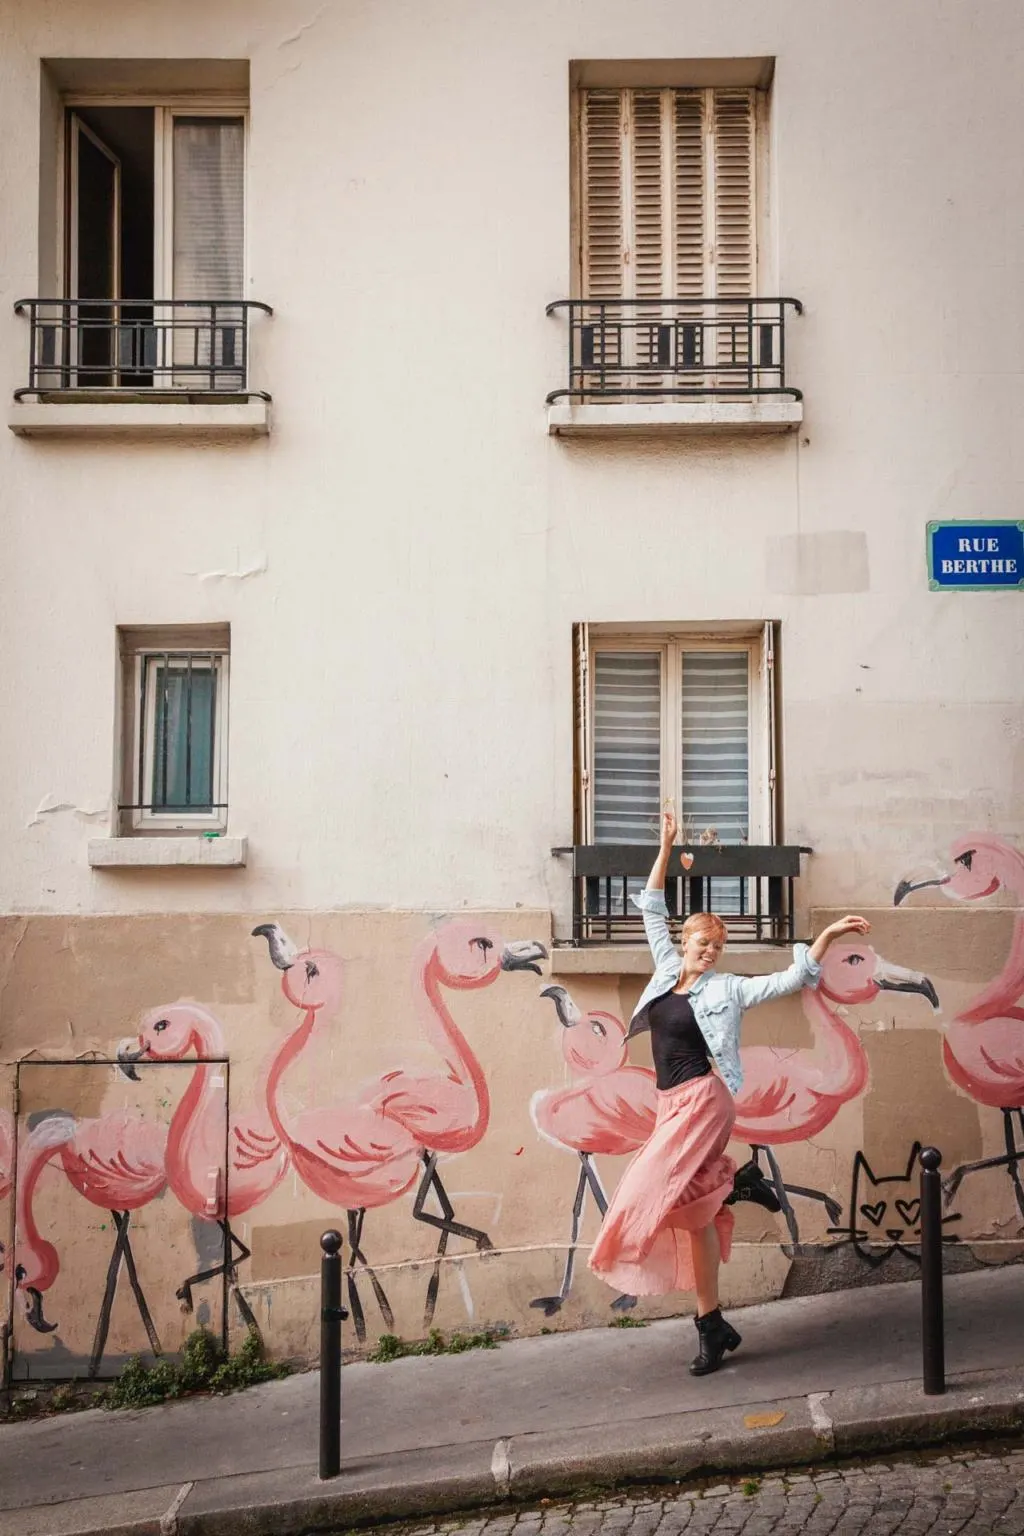 Flamingo Street Art, Montmartre, Rue Berthe, Paris